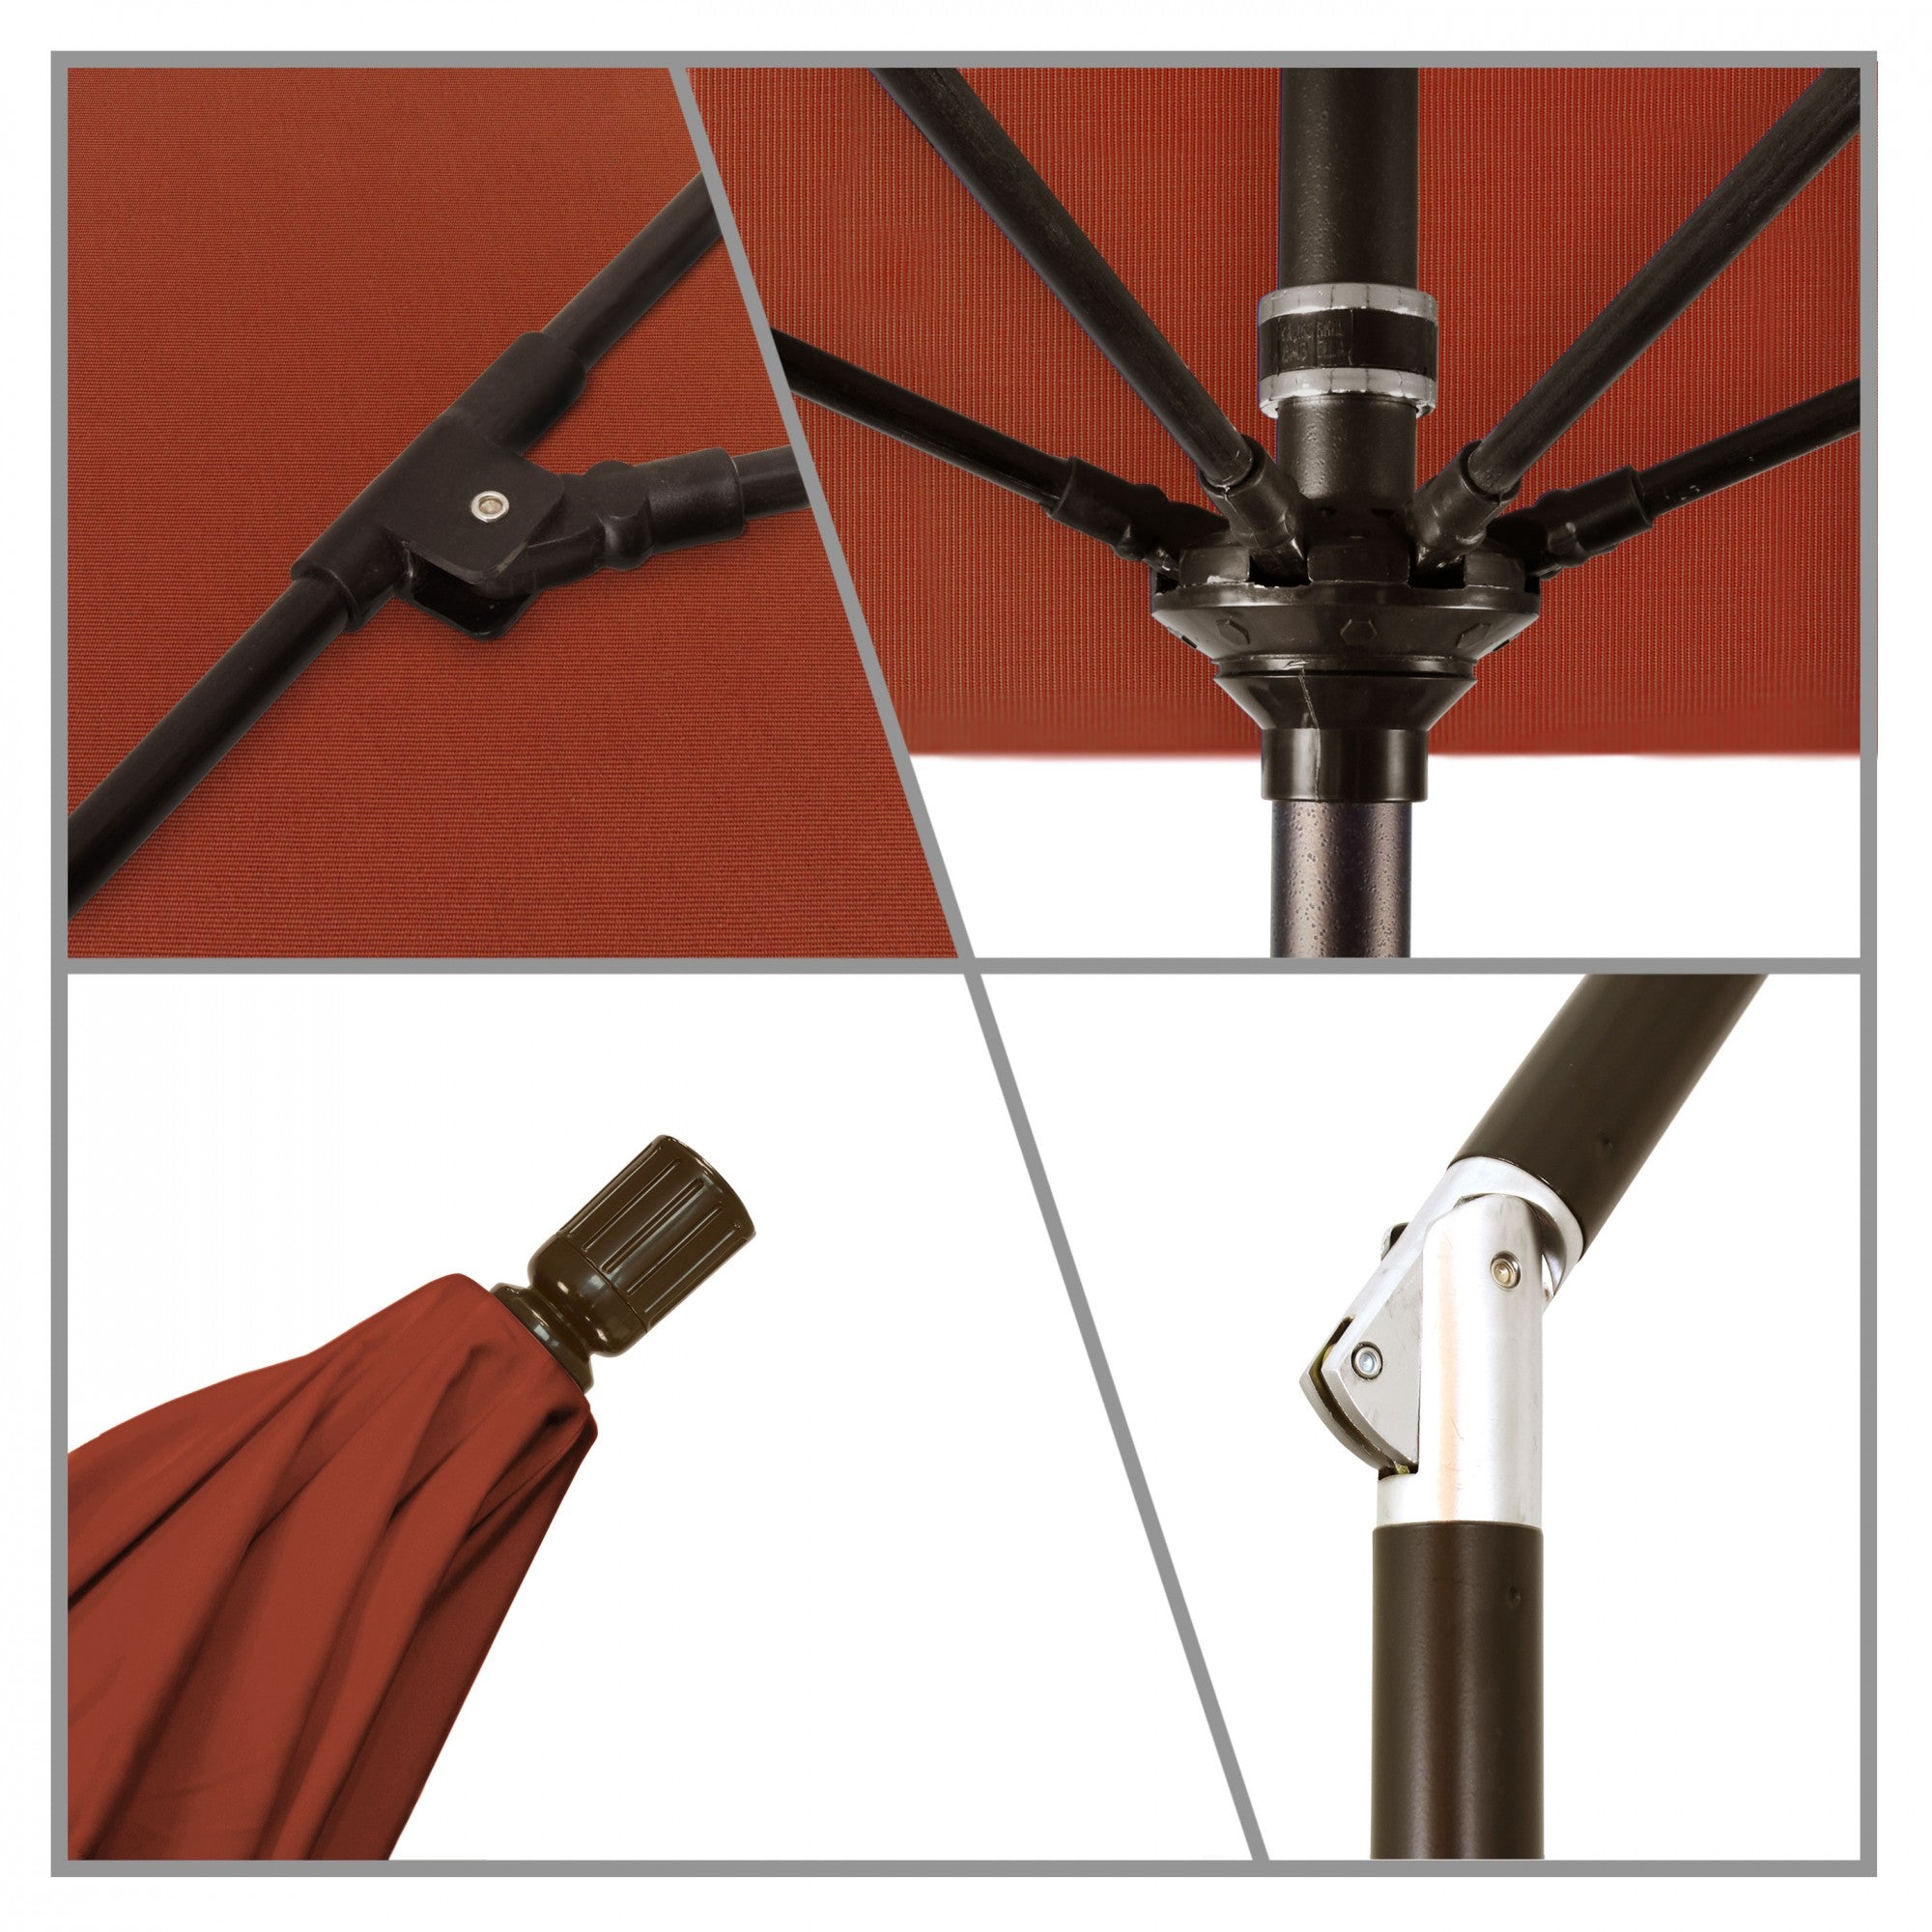 California Umbrella - 9' - Patio Umbrella Umbrella - Aluminum Pole - Terracotta - Sunbrella  - GSCUF908117-5440